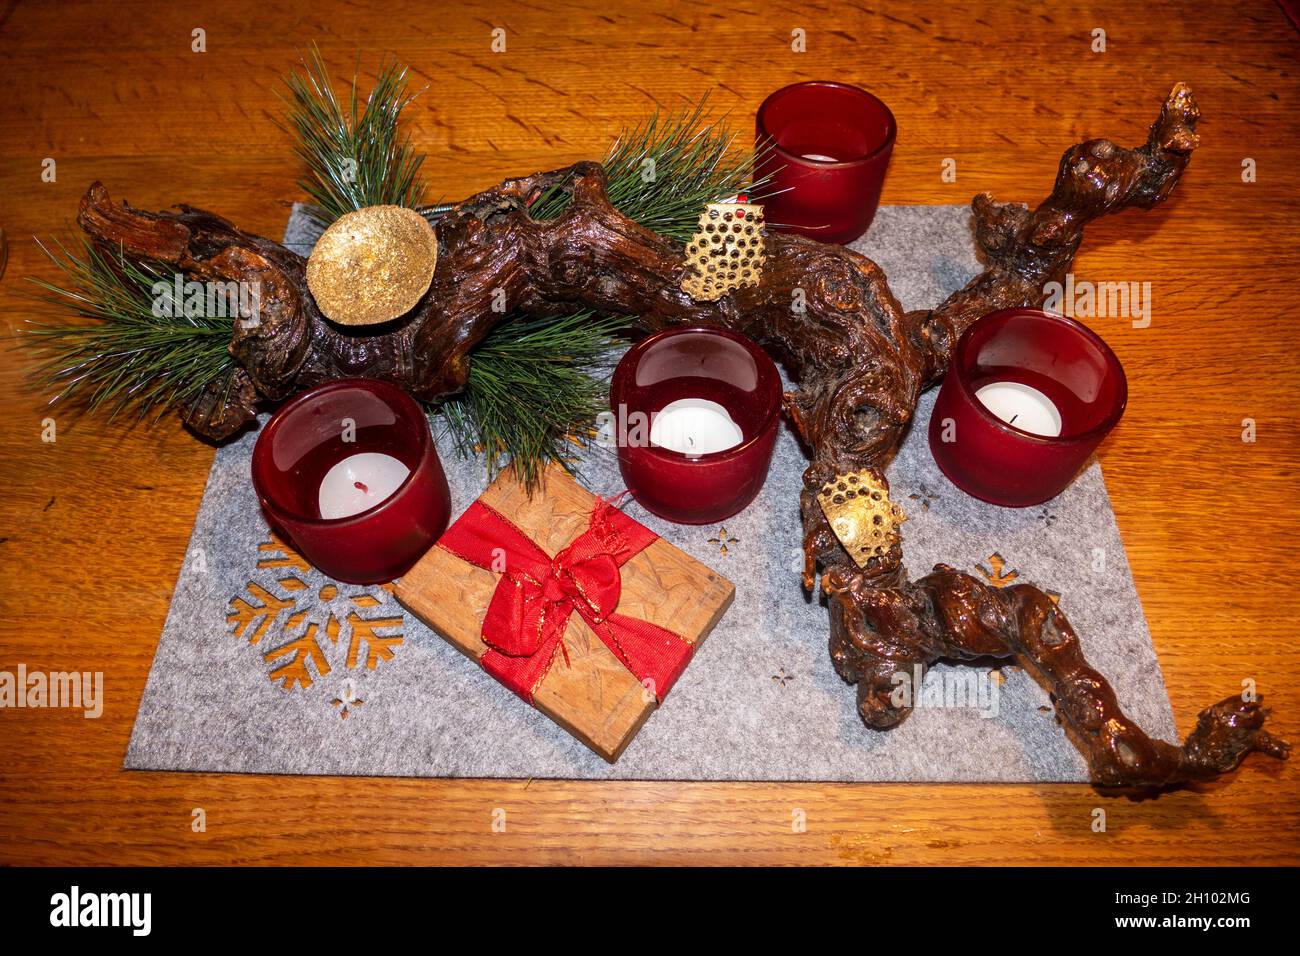 Rebwurzel, Modelo und Kerzen zum Adventsgesteck dekoriert Foto de stock